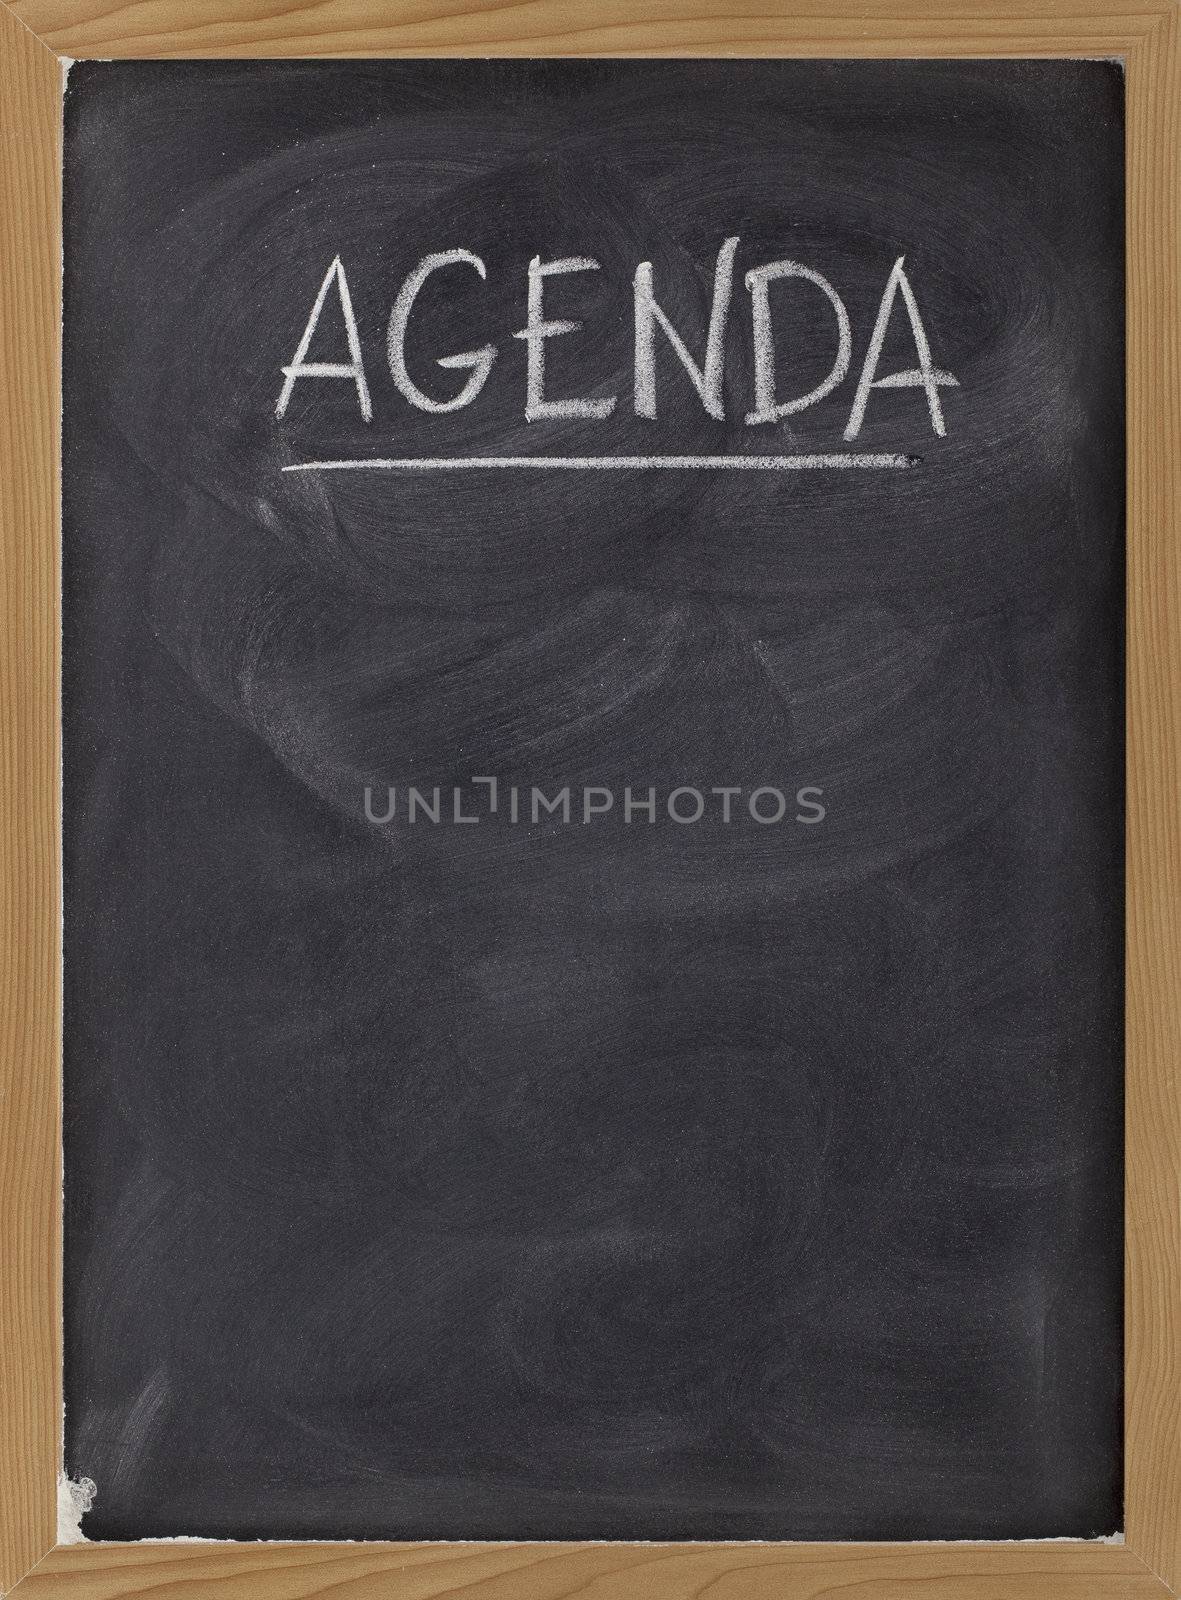 agenda - white chalk handwriting on blackboard with eraser smudges texture, copy space below